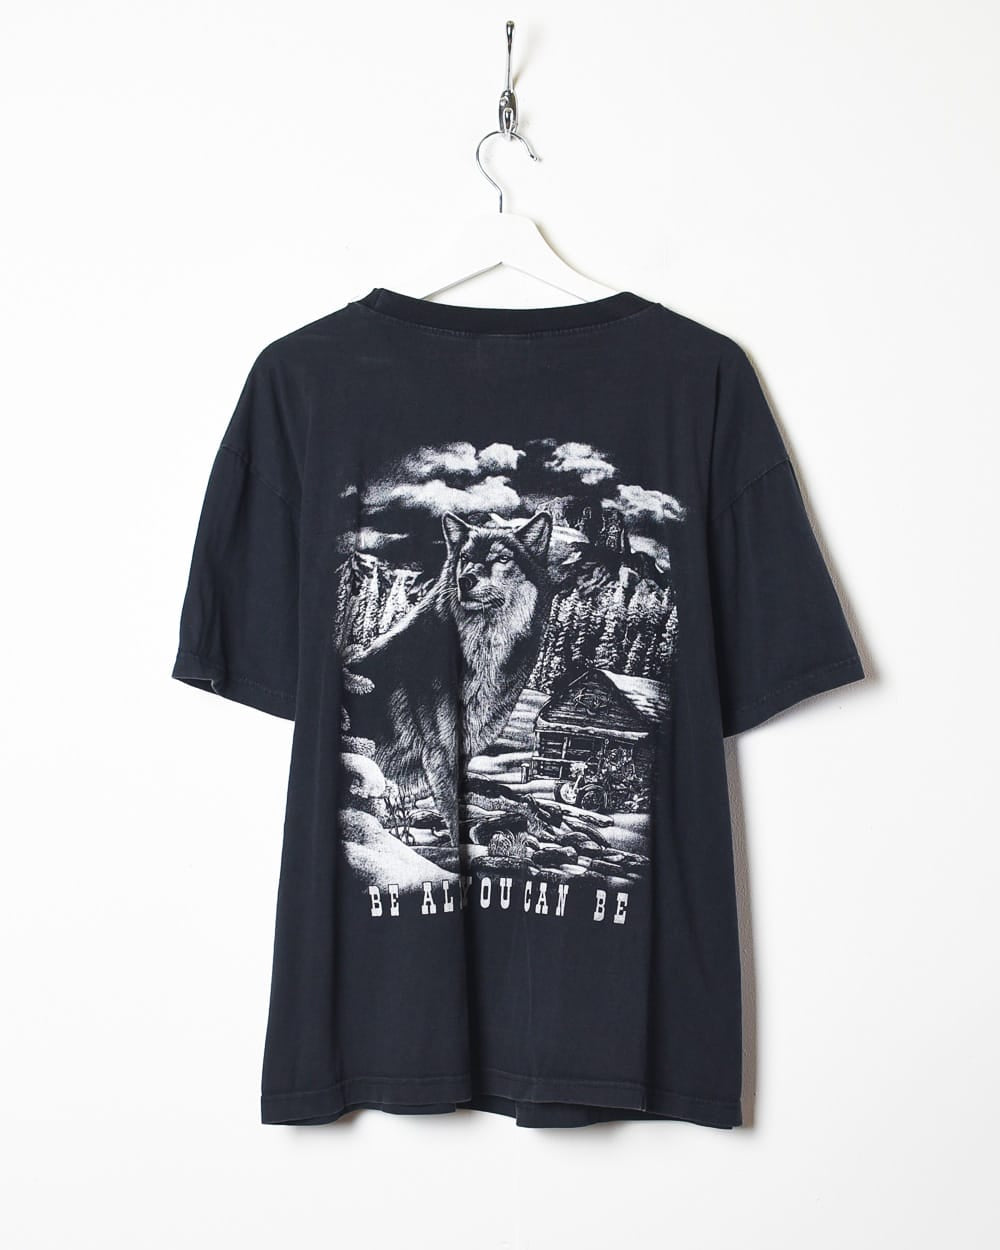 Black SP Wolf Graphic T-Shirt - Medium